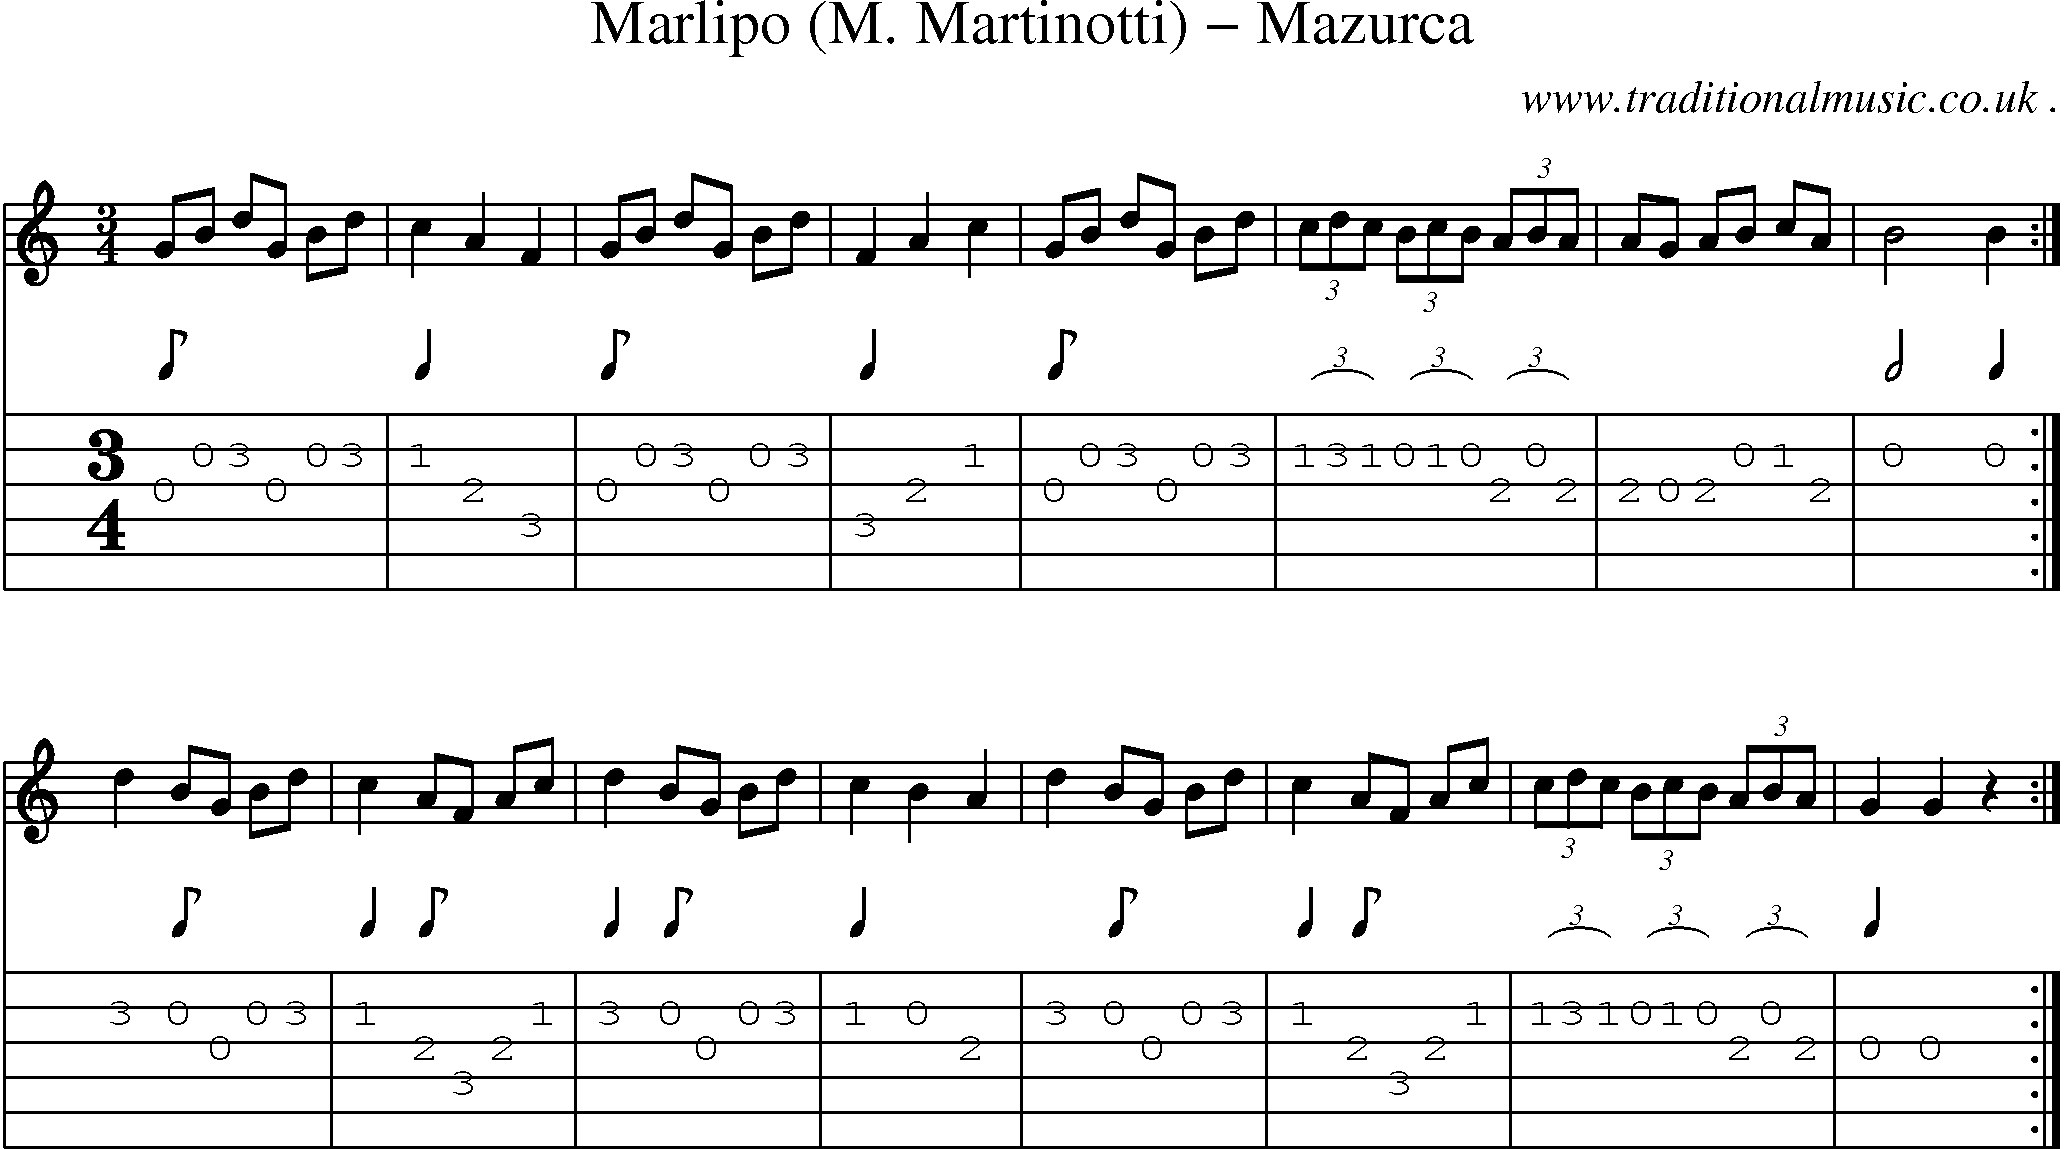 Sheet-Music and Guitar Tabs for Marlipo (m Martinotti) Mazurca